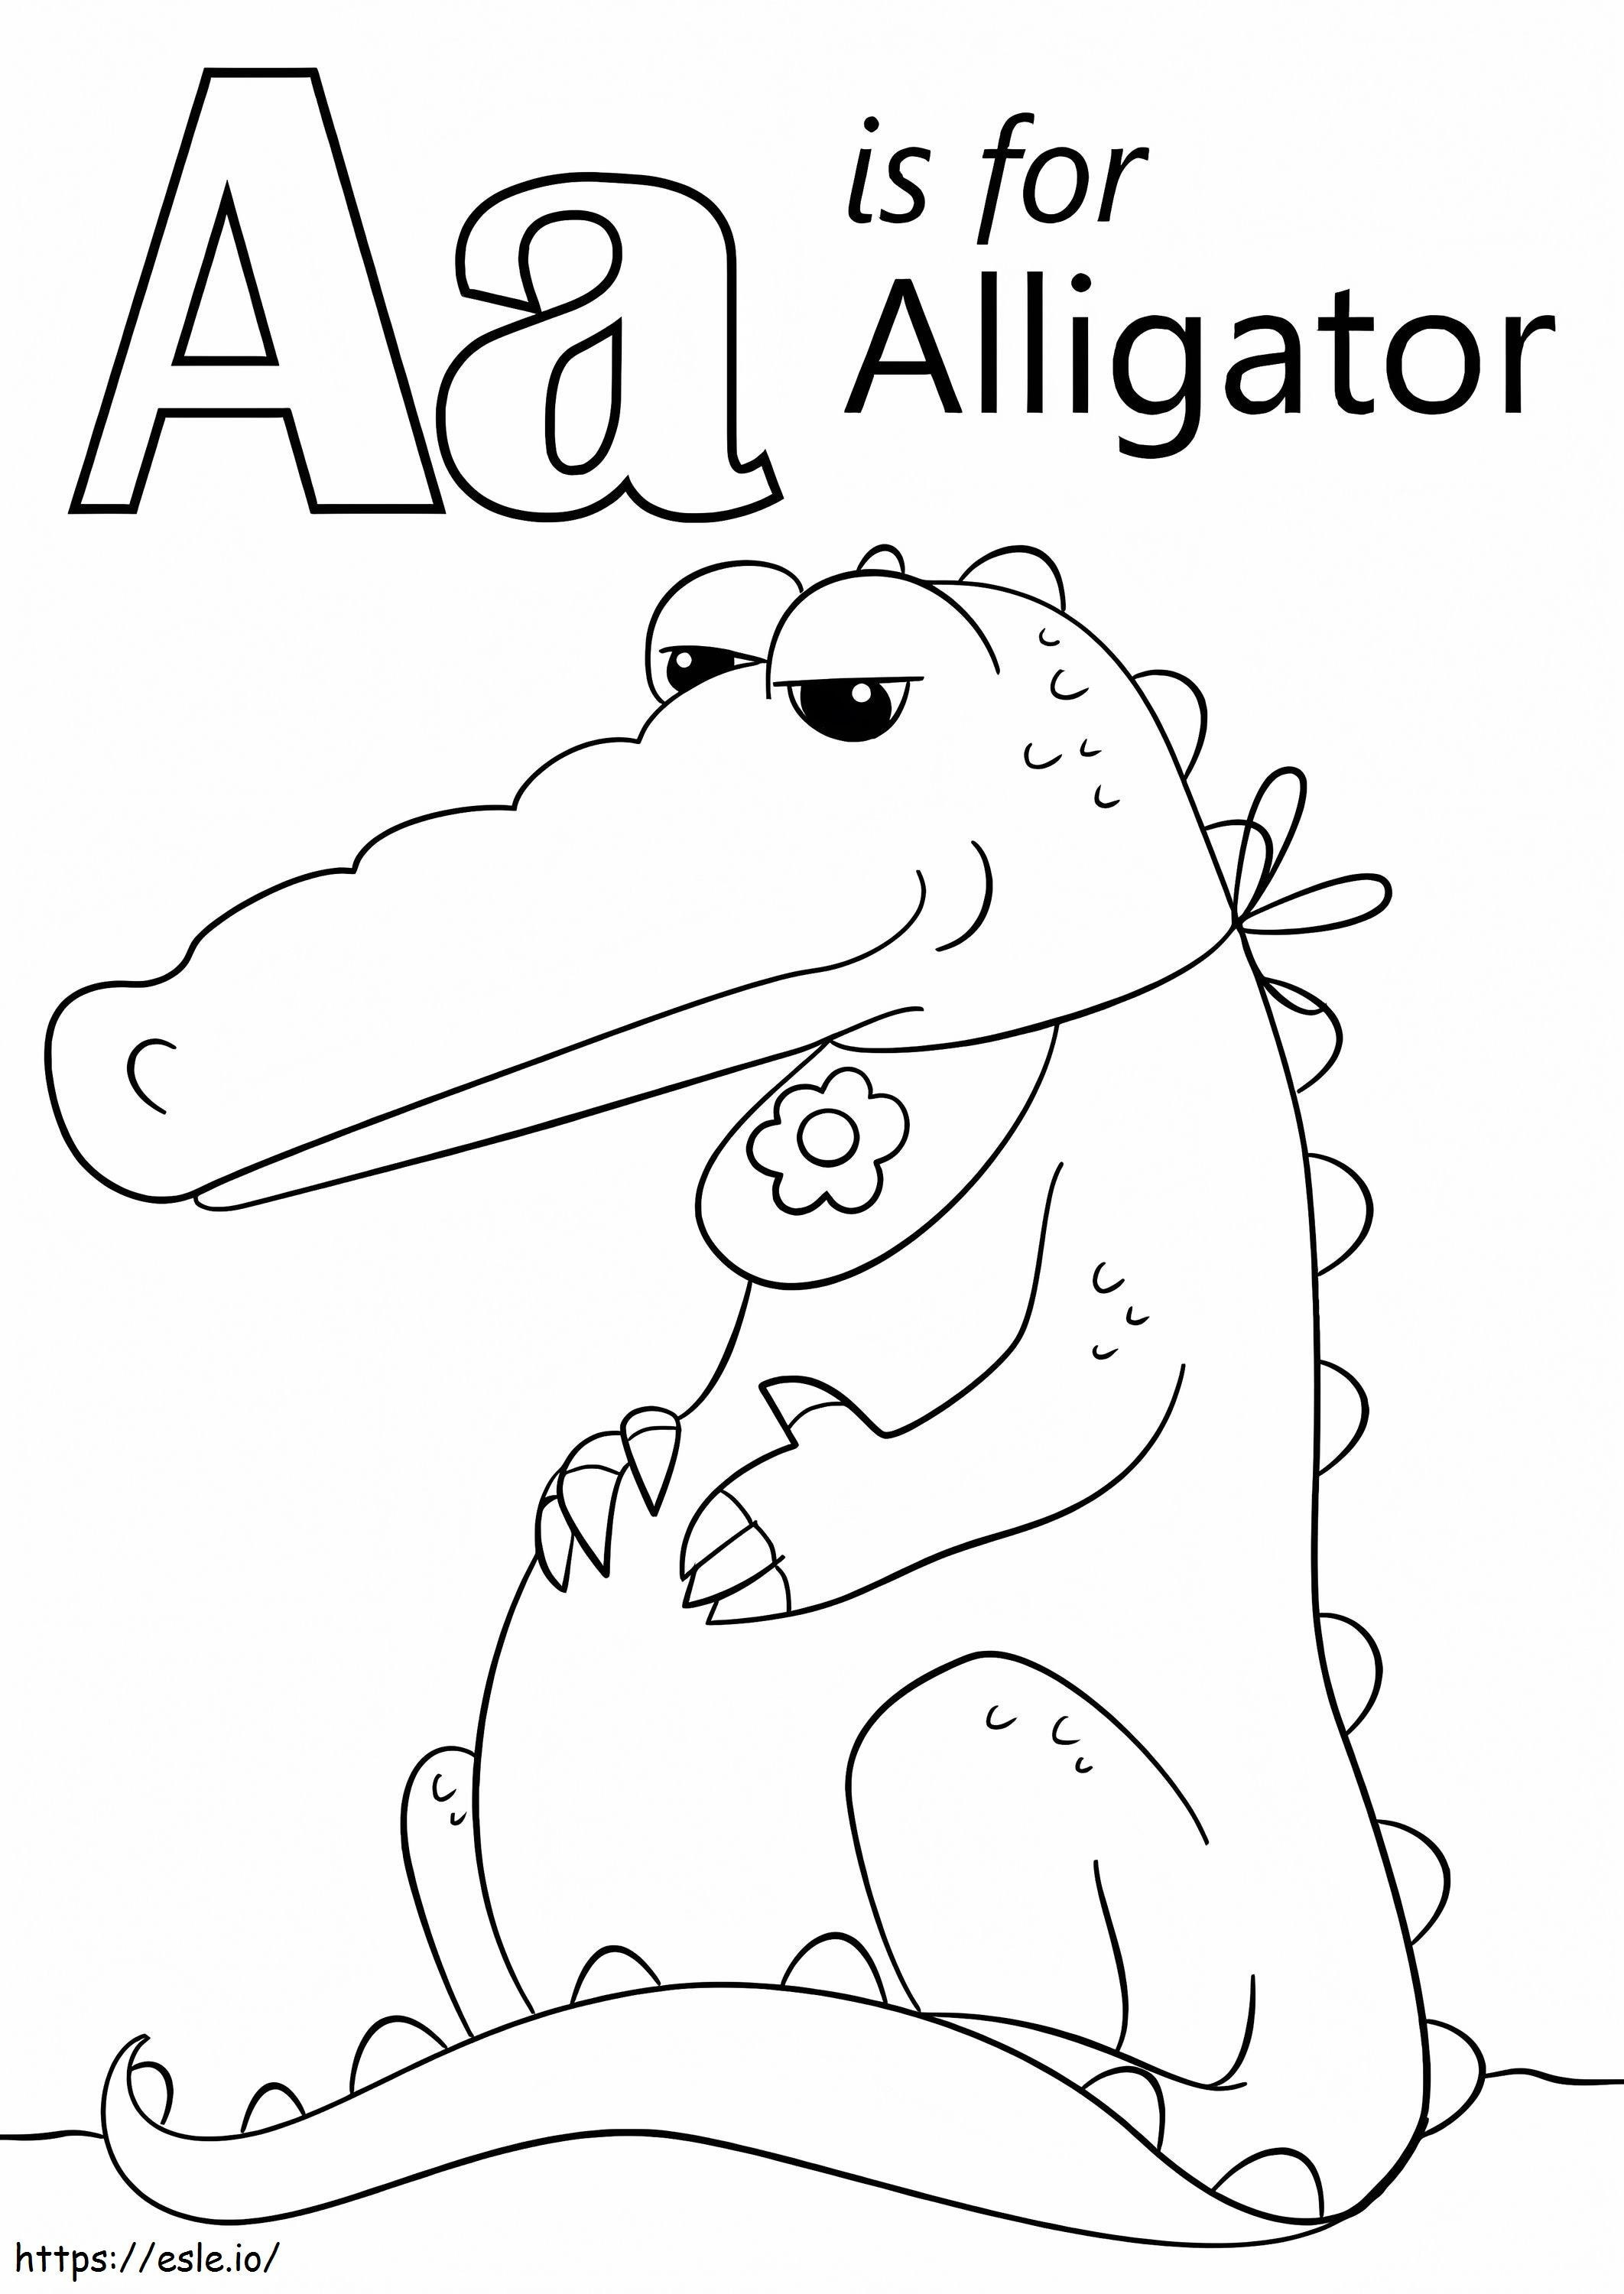 Crocodile Letter A coloring page